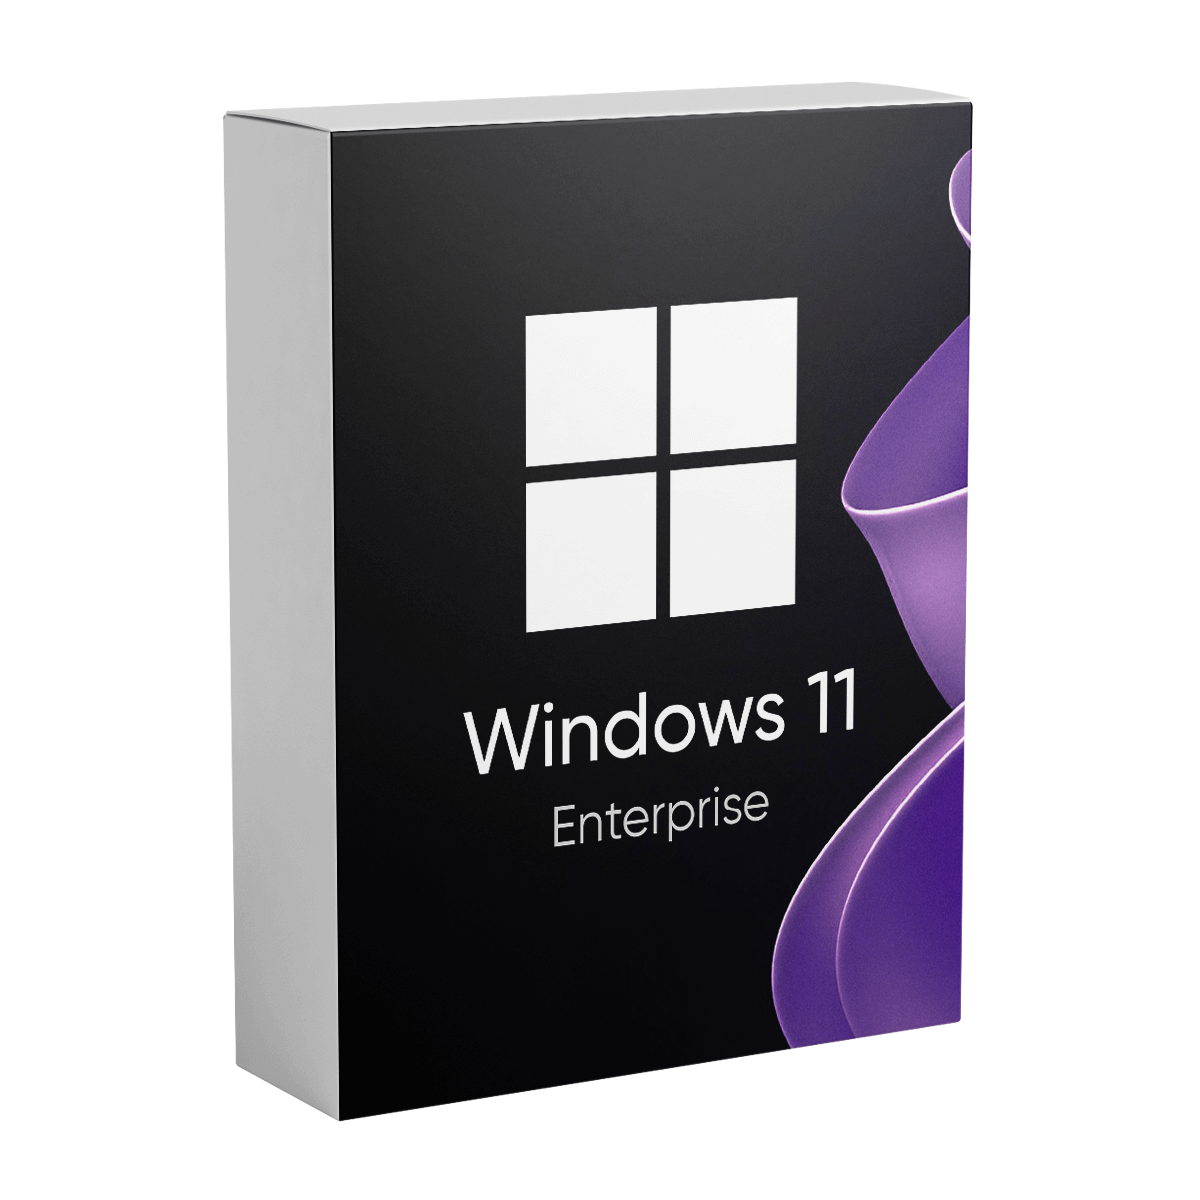 Windows 11 Enterprise - Lifetime License for 1 PC